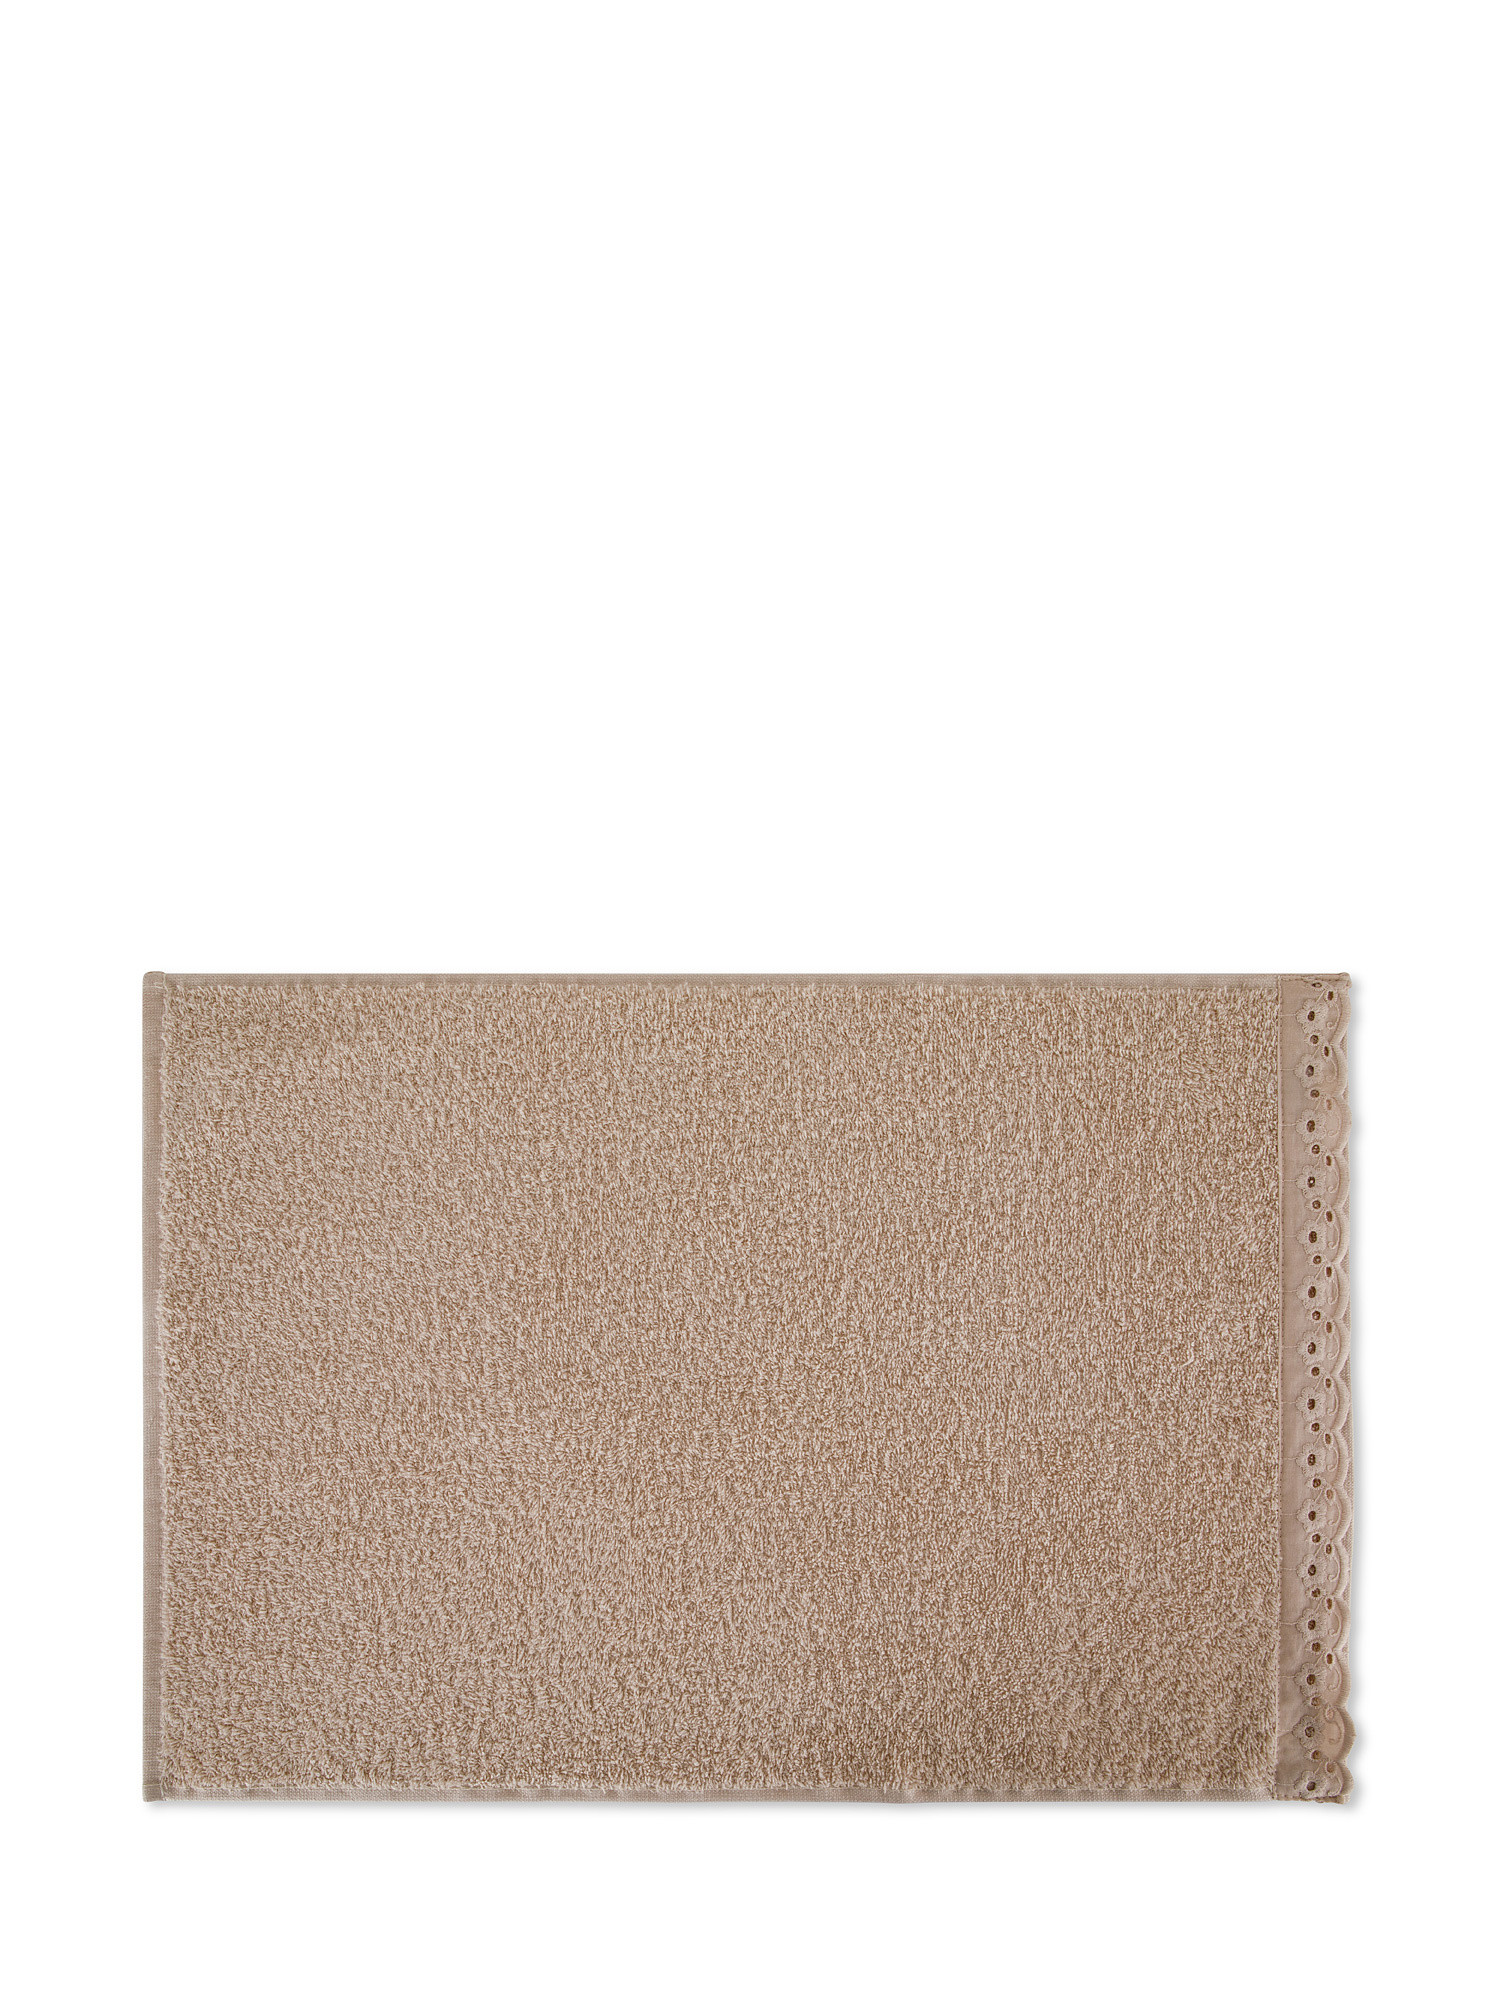 Asciugamano spugna di cotone bordo sangallo, Beige, large image number 1